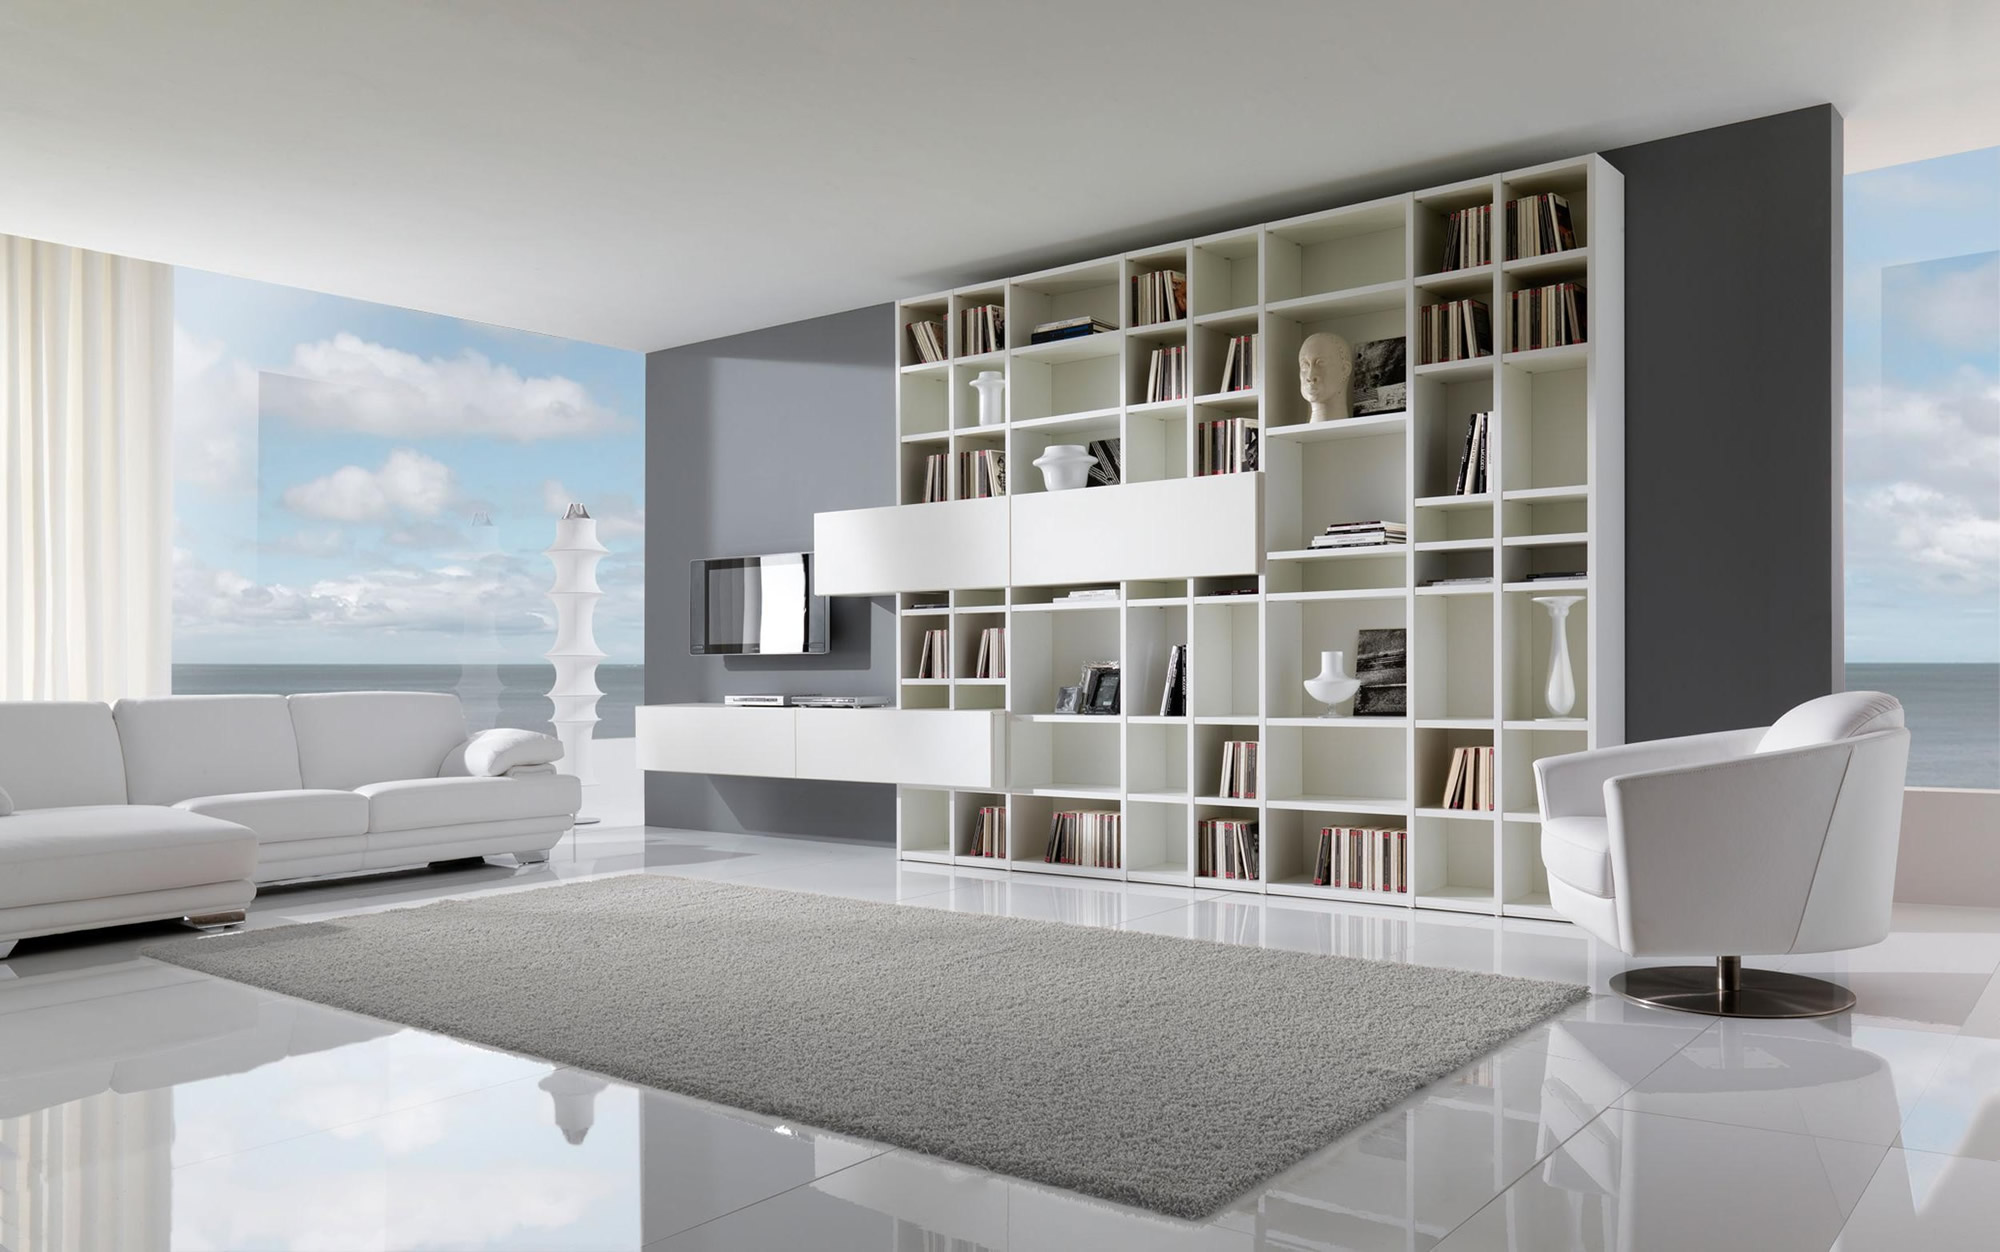 Living Room Ideas With White Tile Floor